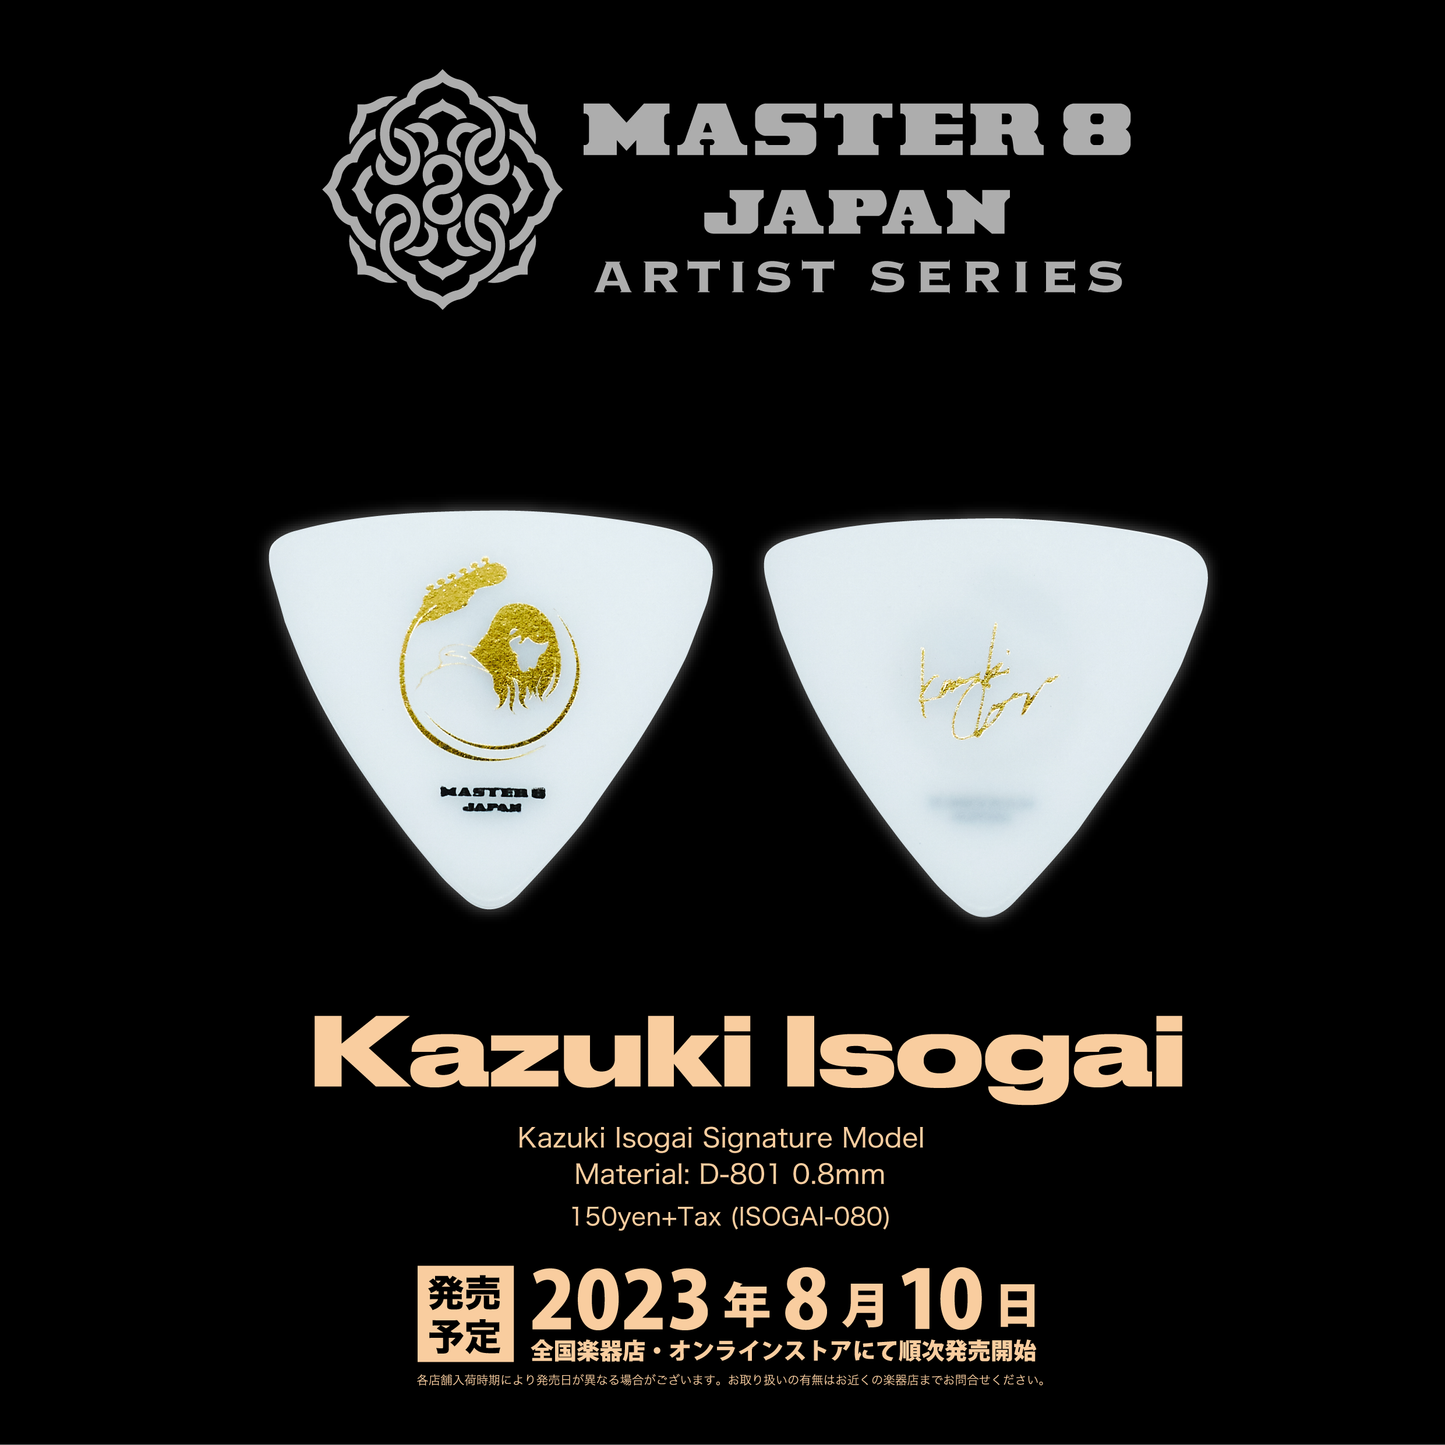 MASTER 8 JAPAN | Kazuki Isogai Signature Model